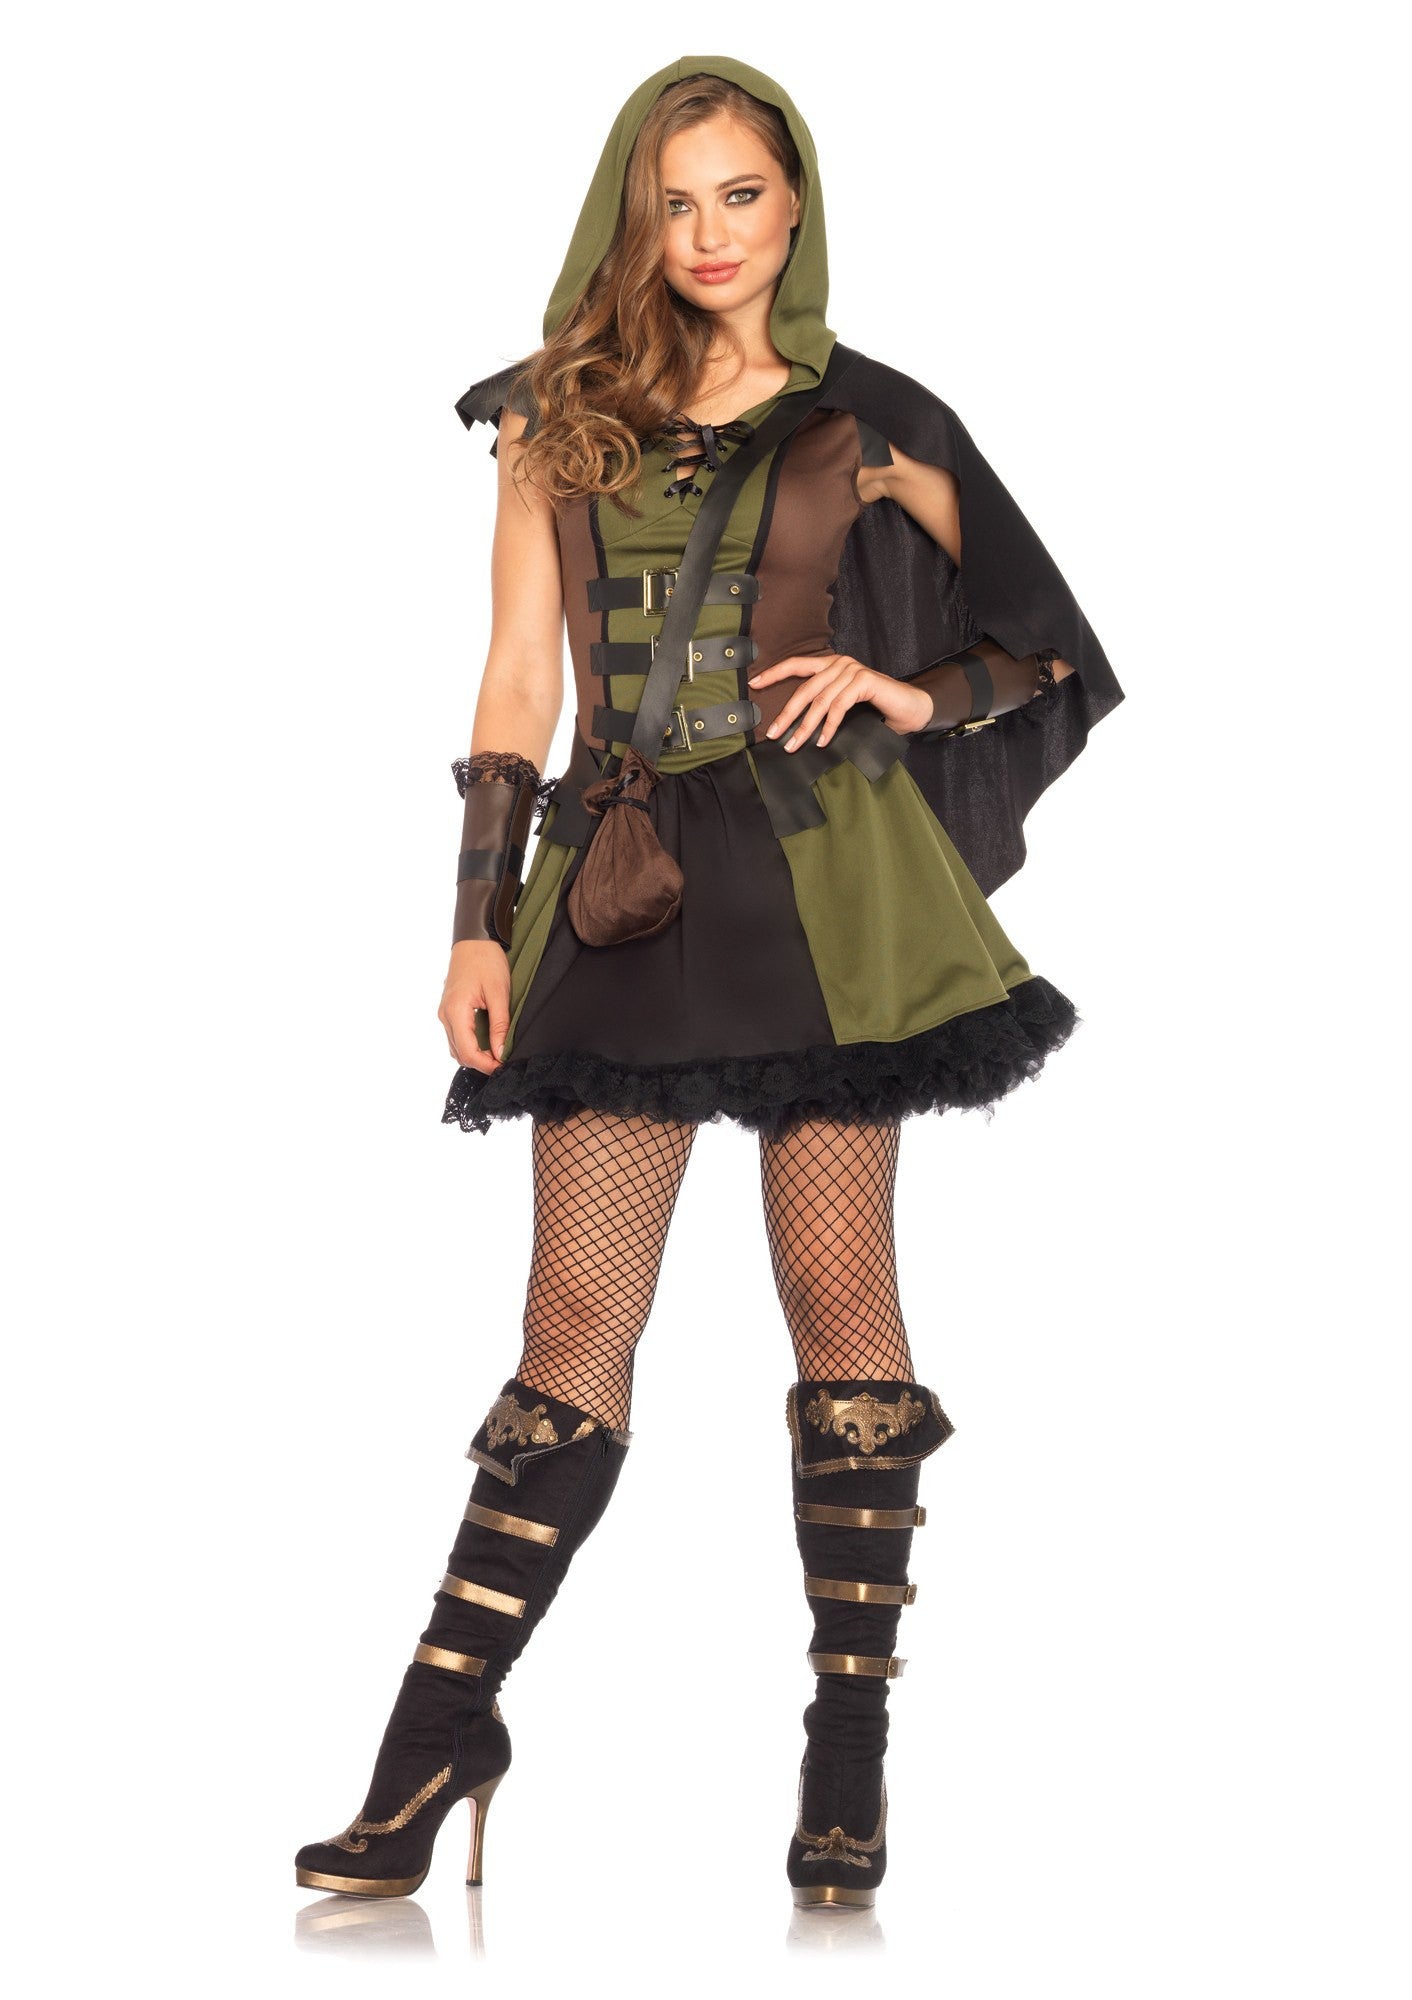 Costume - Darling Robin Hood Costume